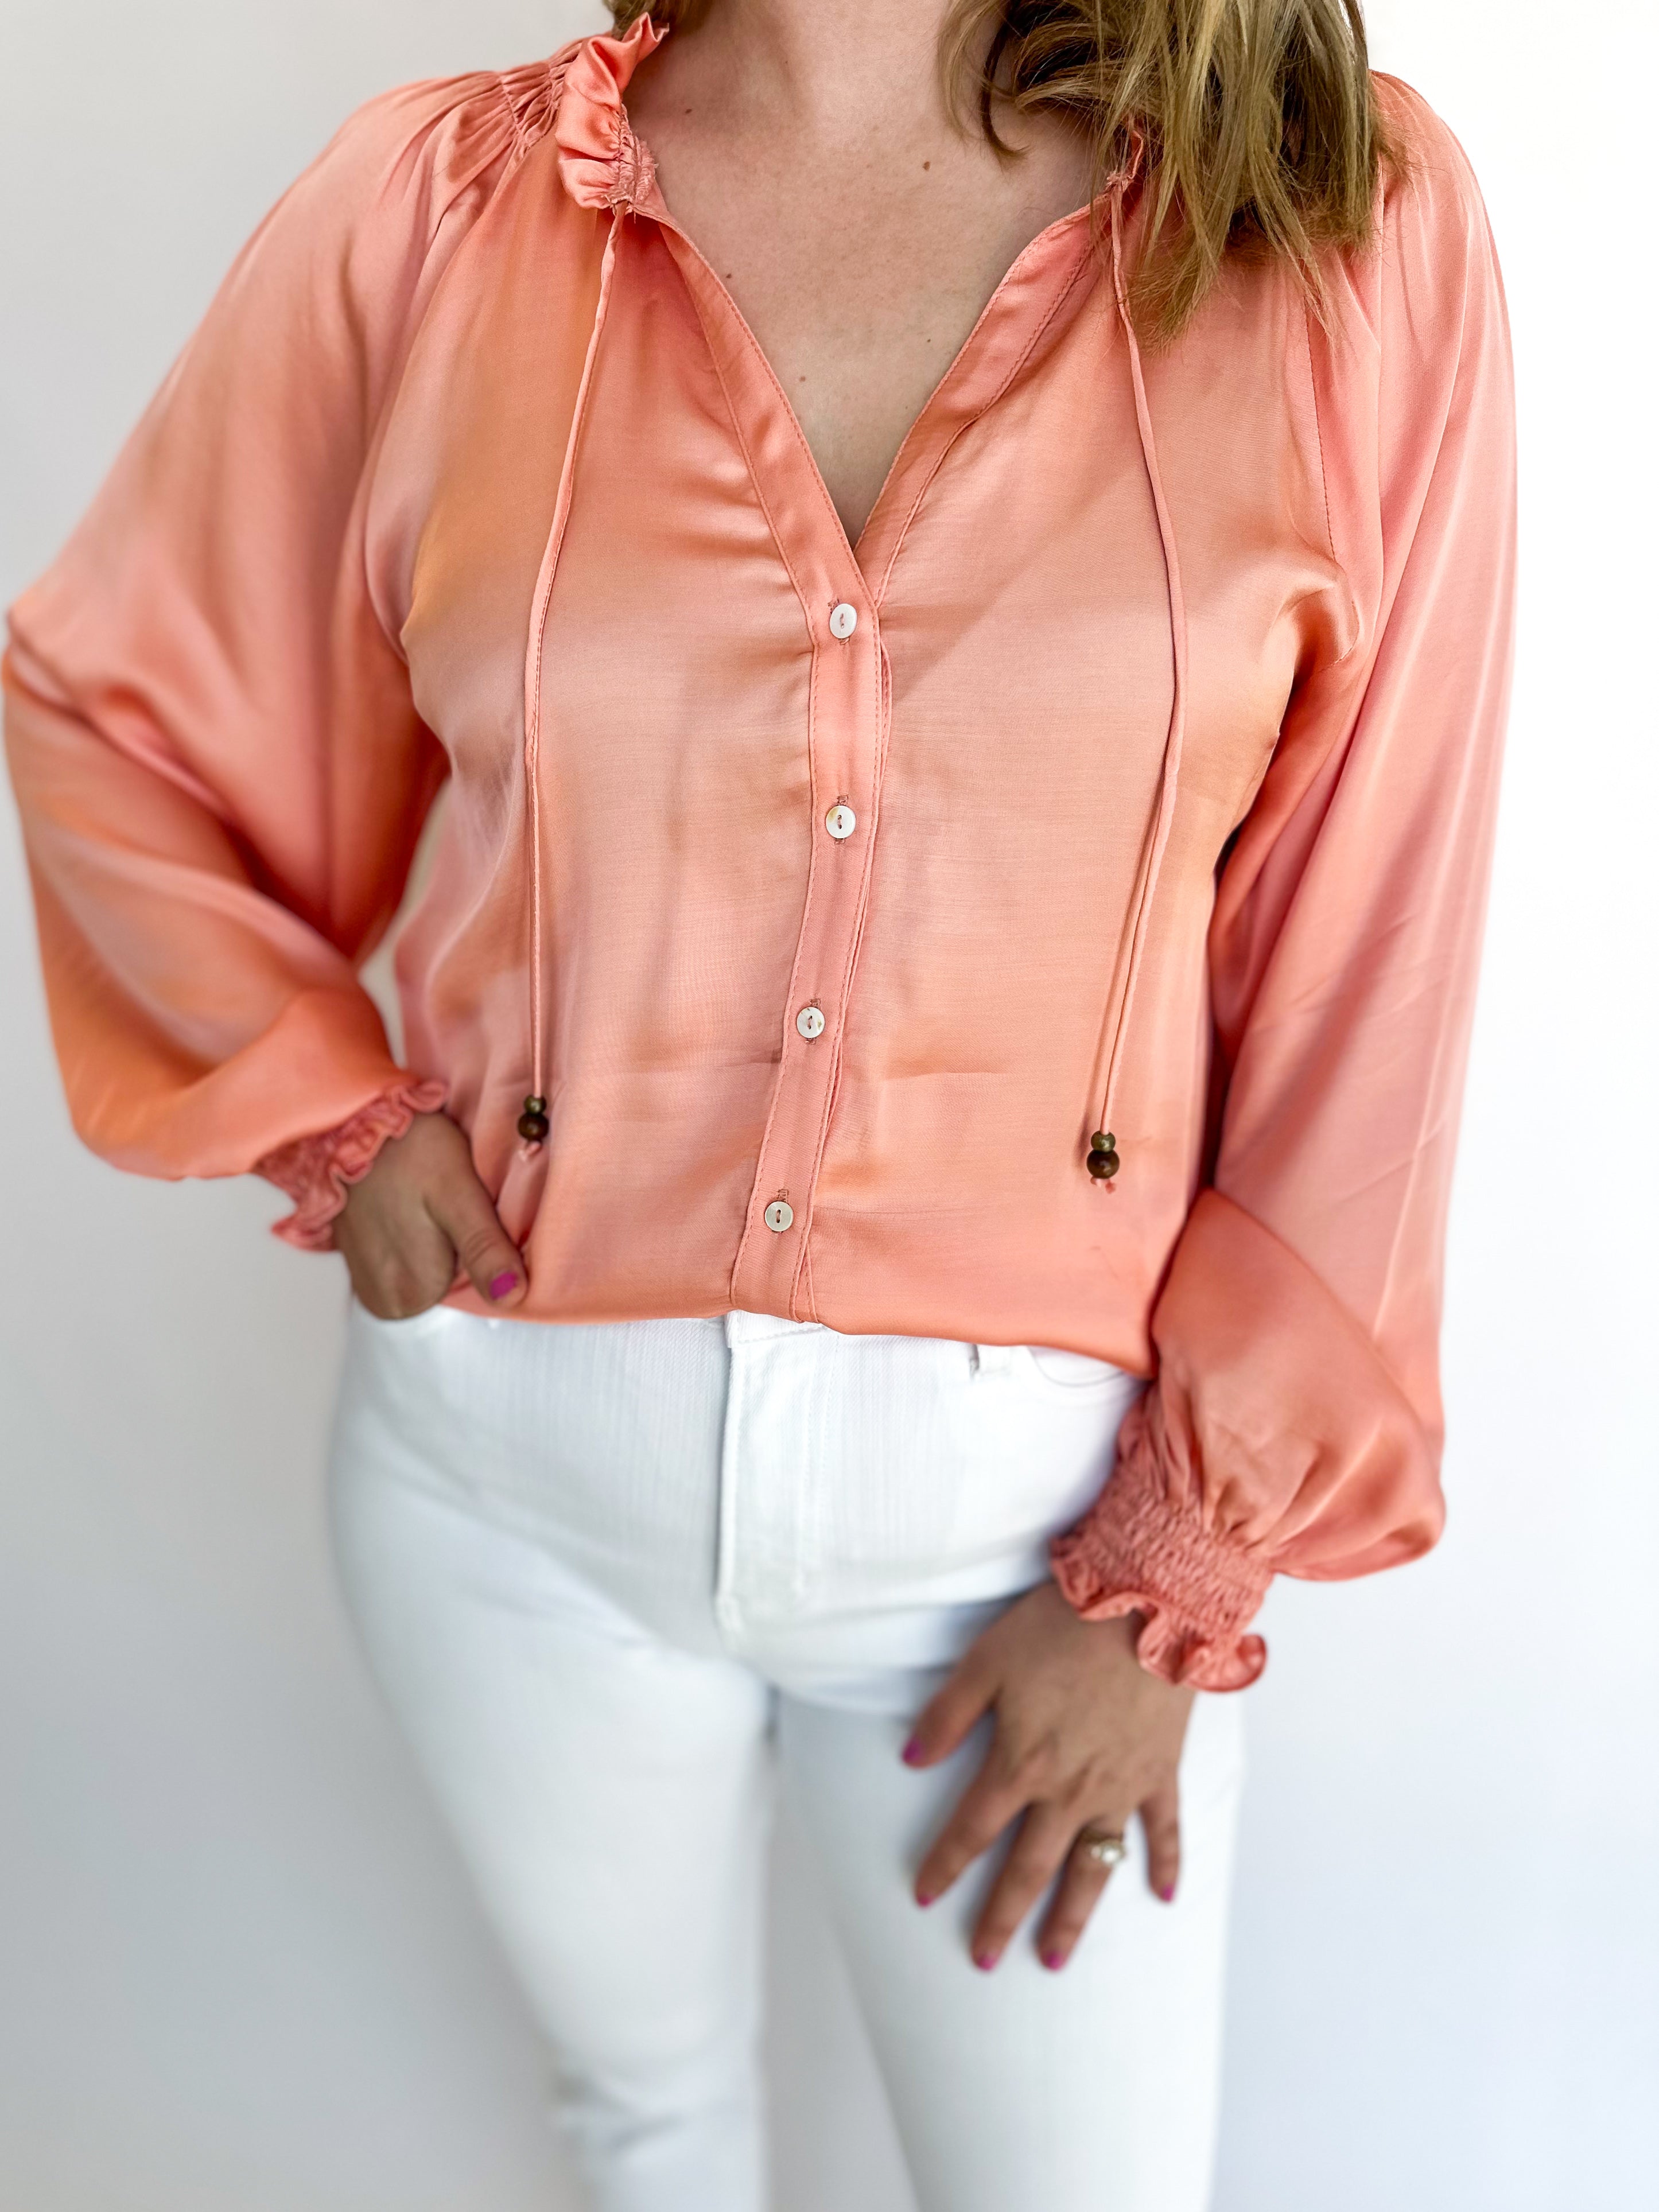 Pastel Satin Blouse - Peach-200 Fashion Blouses-OLIVACEOUS-July & June Women's Fashion Boutique Located in San Antonio, Texas